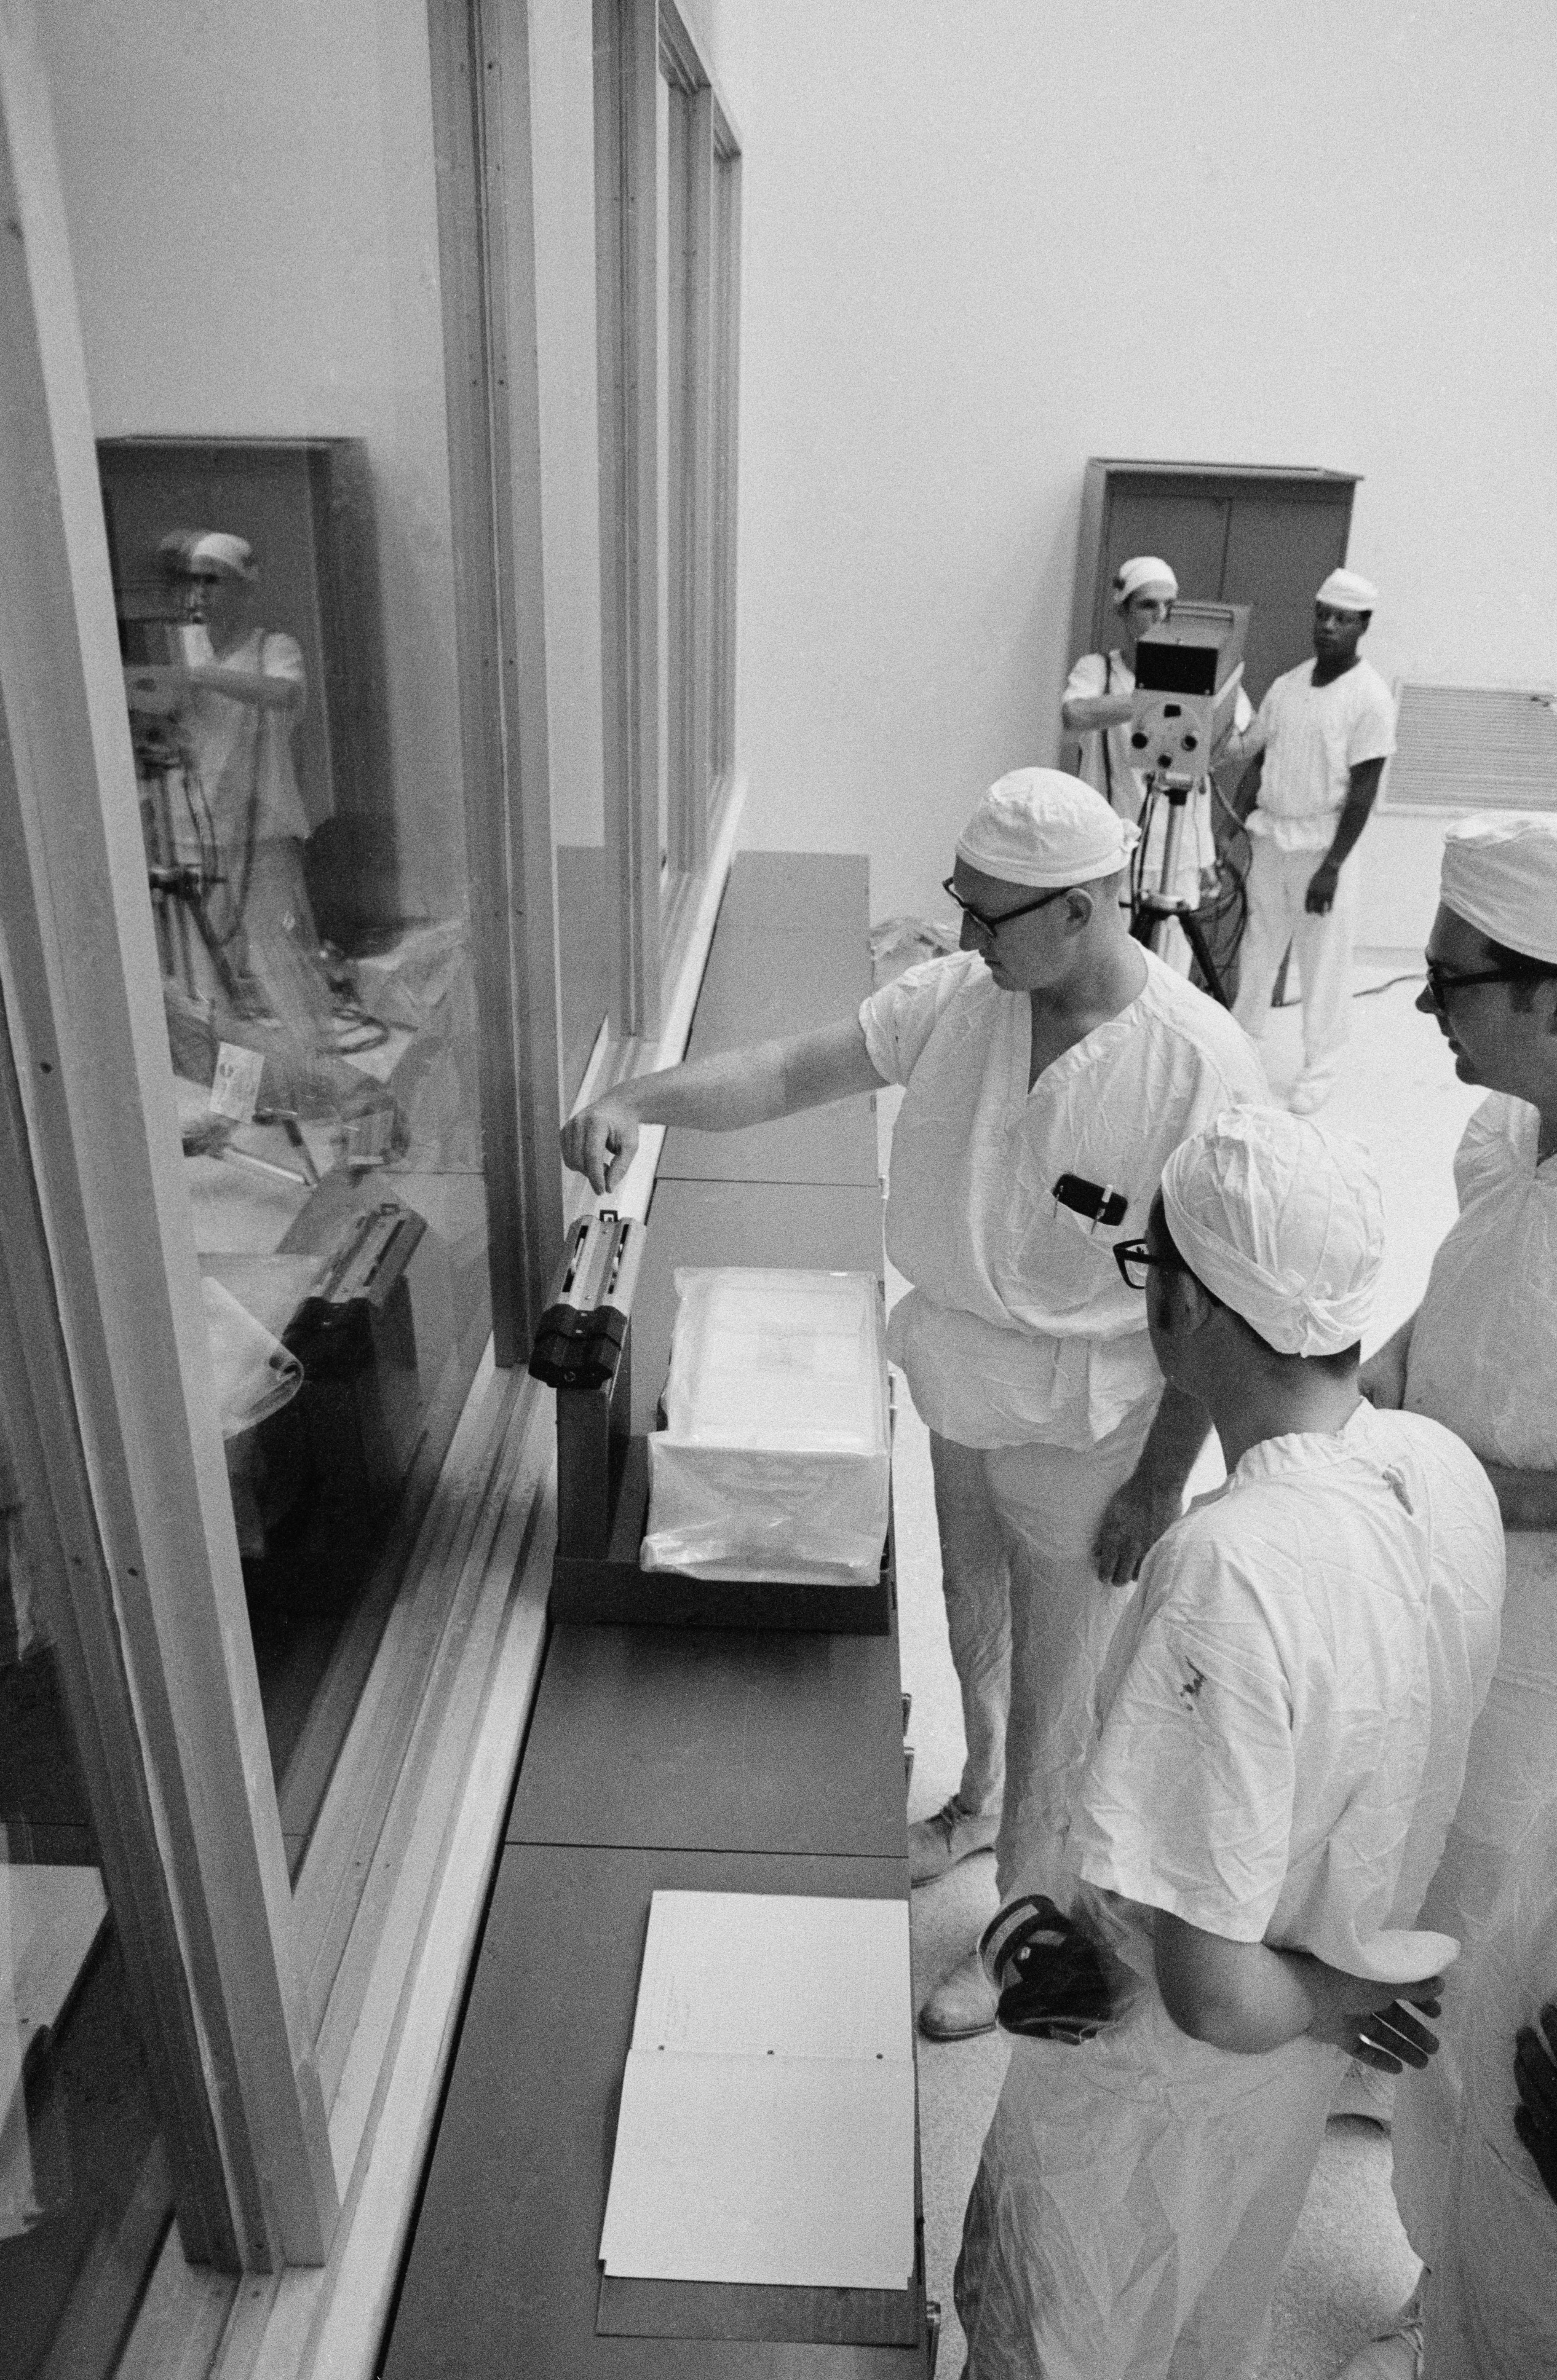 Technicians weigh the box of Moon rocks